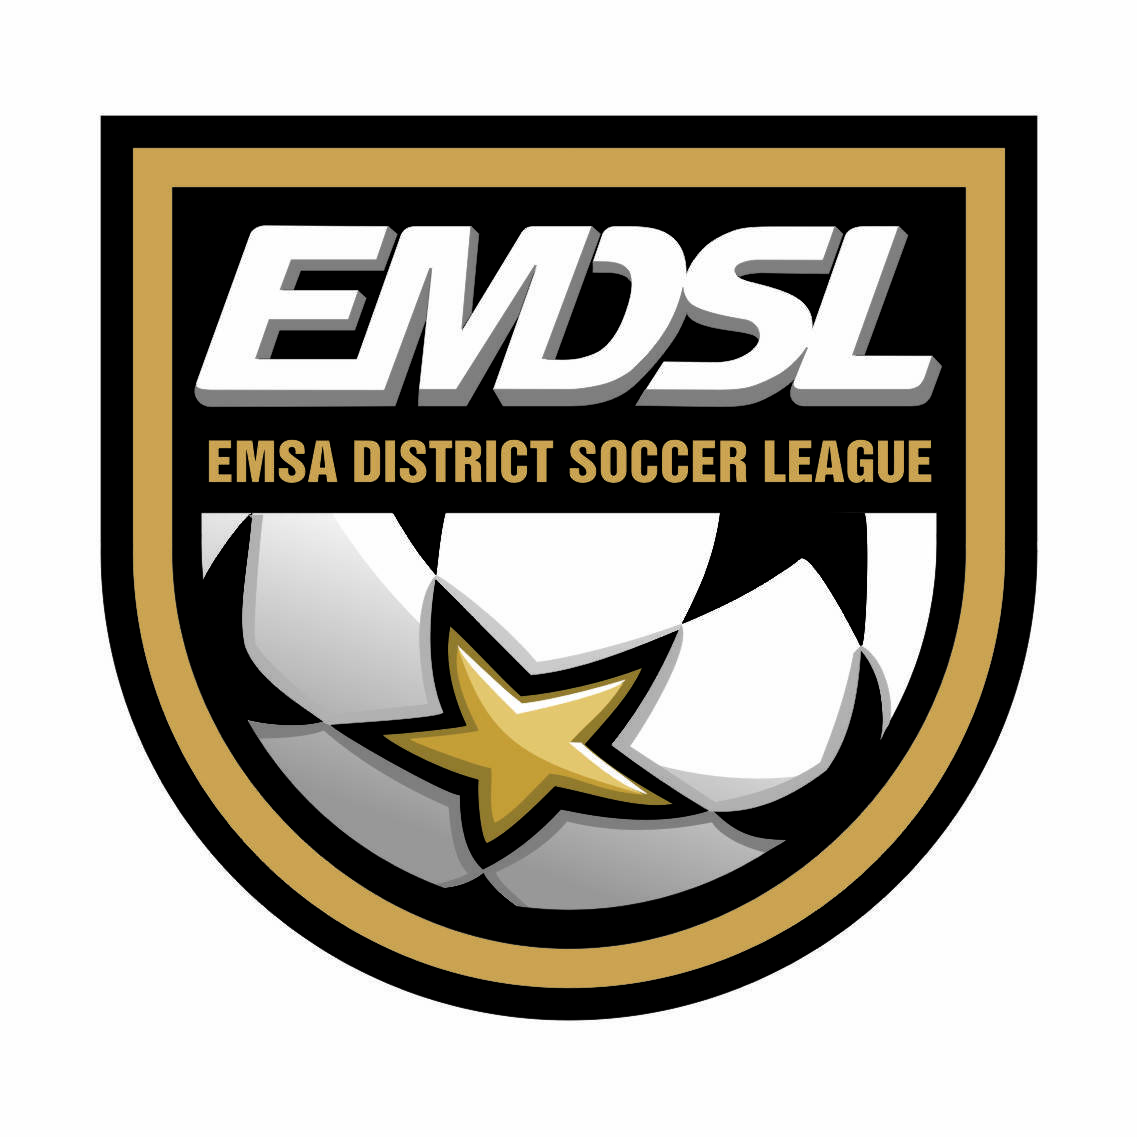 Elgin Middlesex District Soccer League